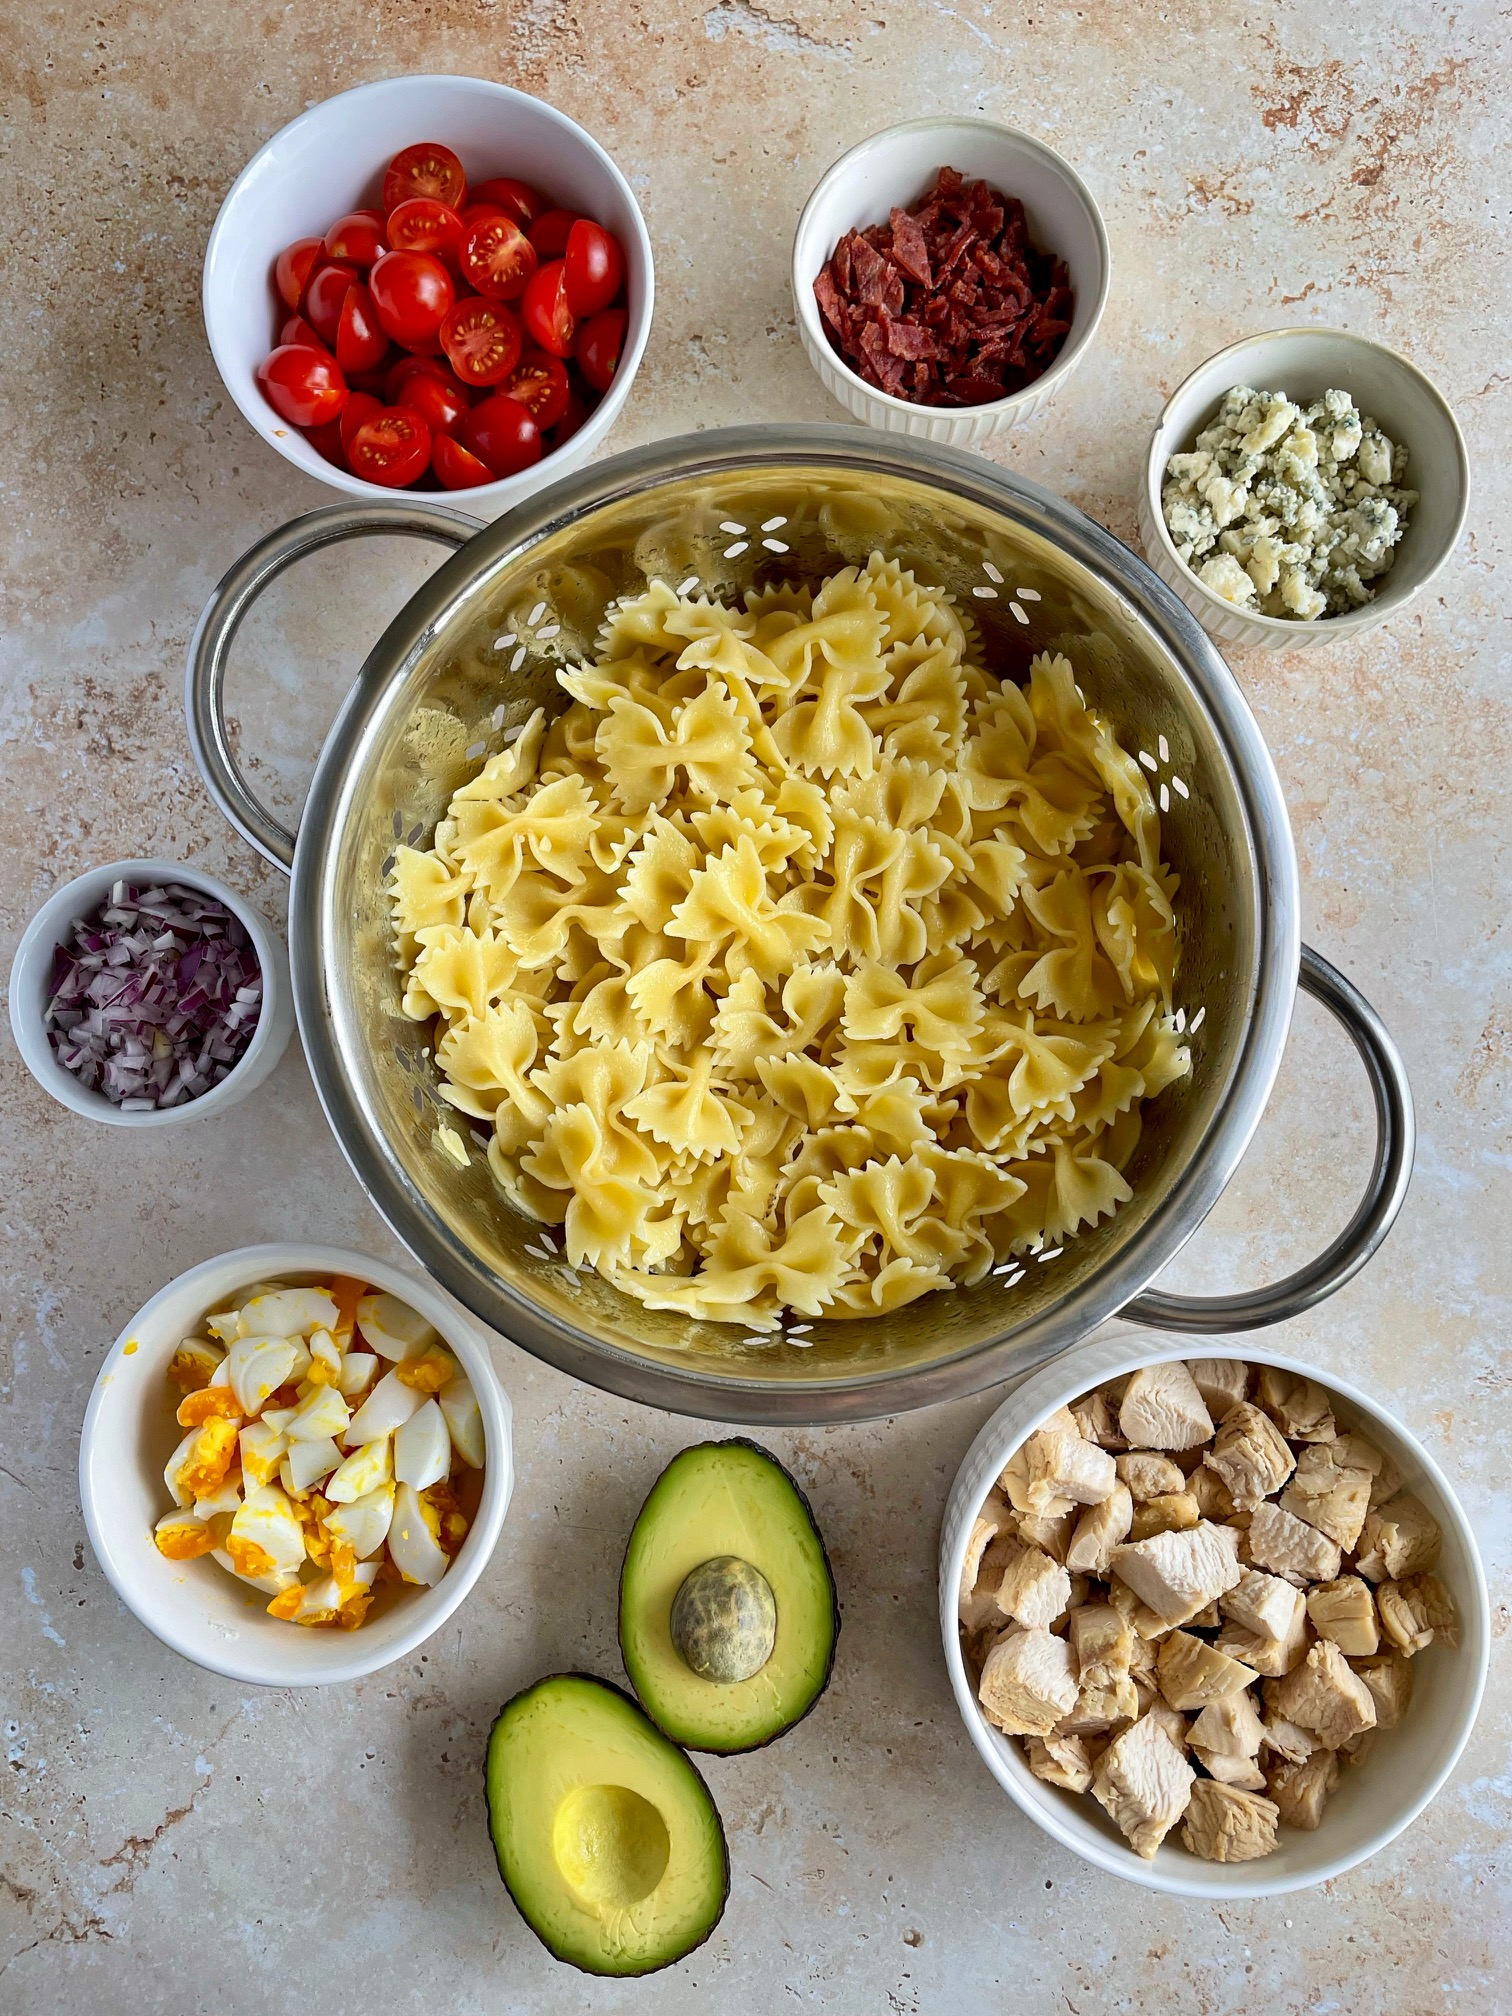 The Cobb pasta salad ingredients. 